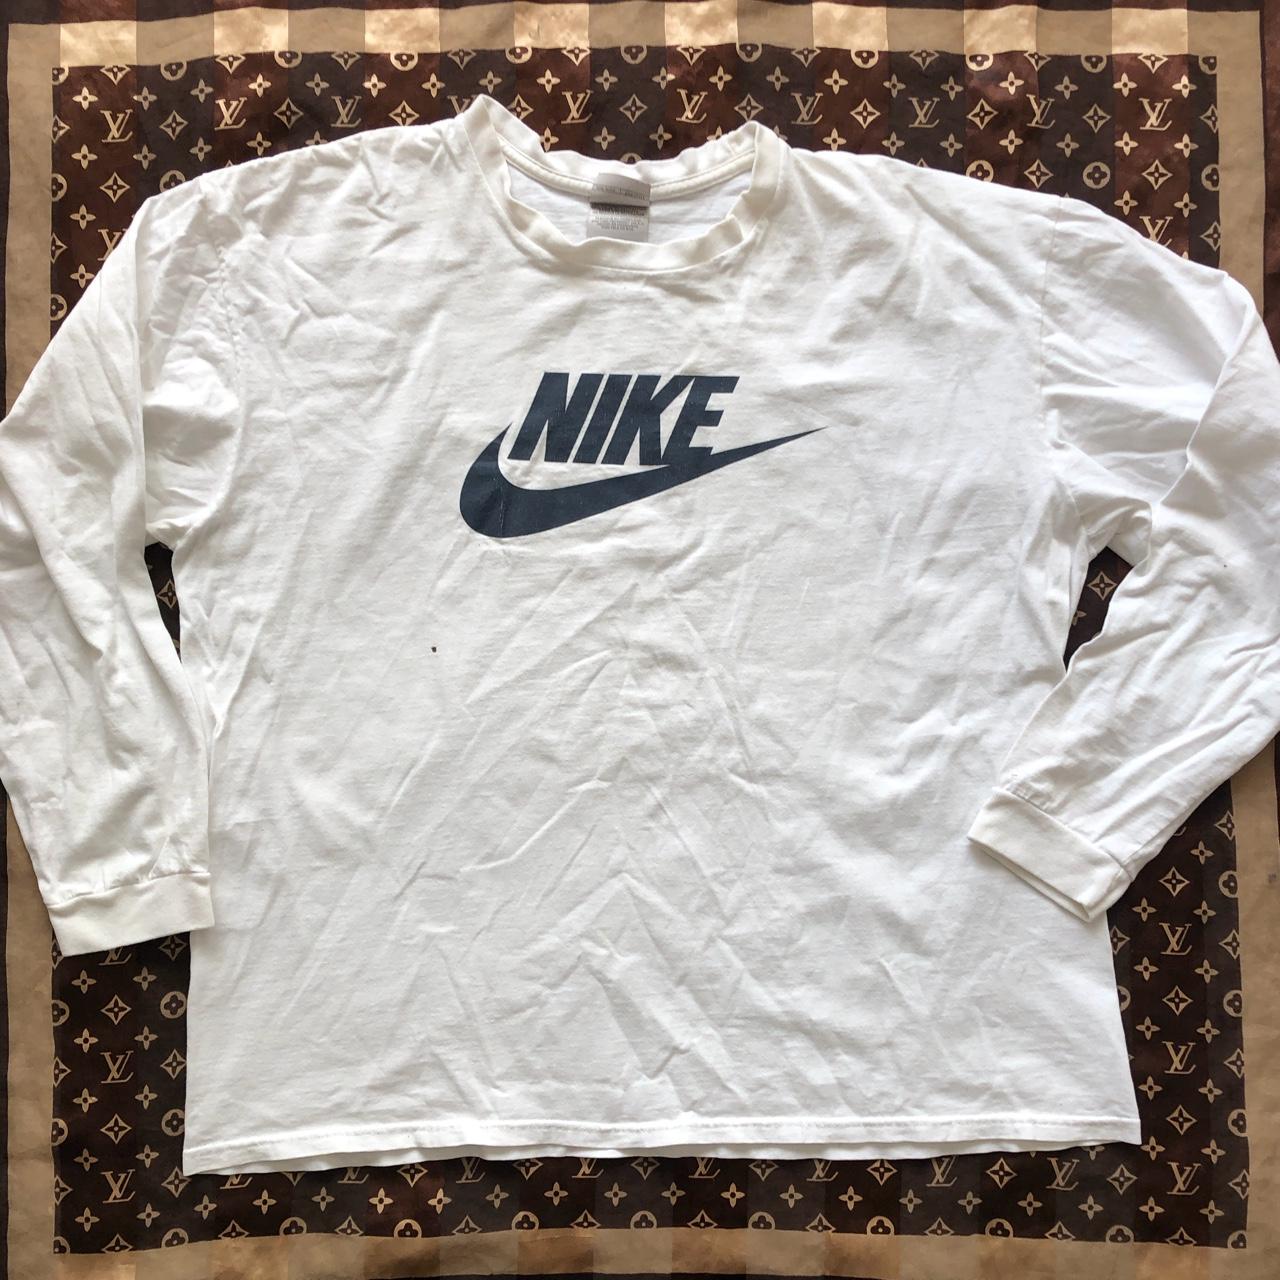 Nike Men's White and Blue T-shirt | Depop